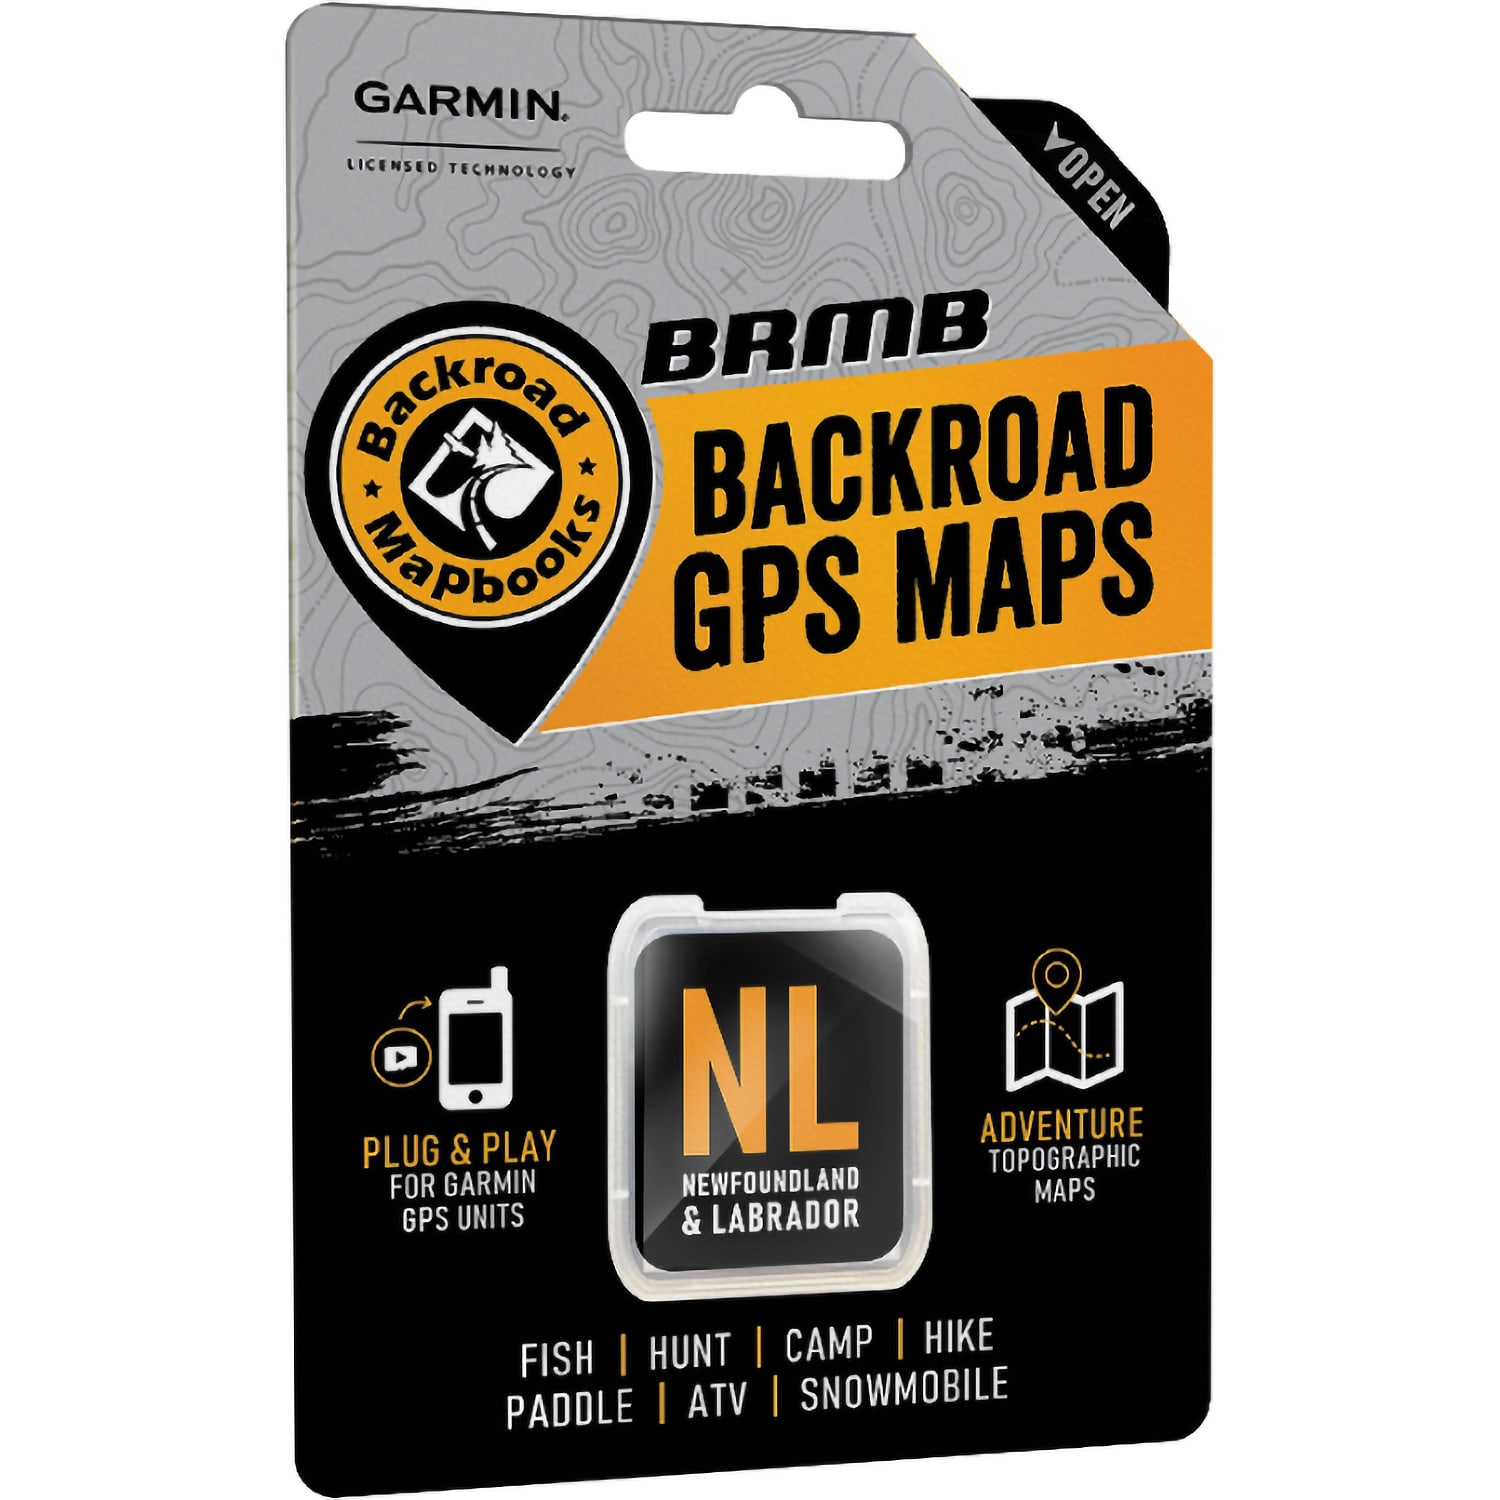 Backroad Mapbooks - Newfoundland & Labrador GPS Maps